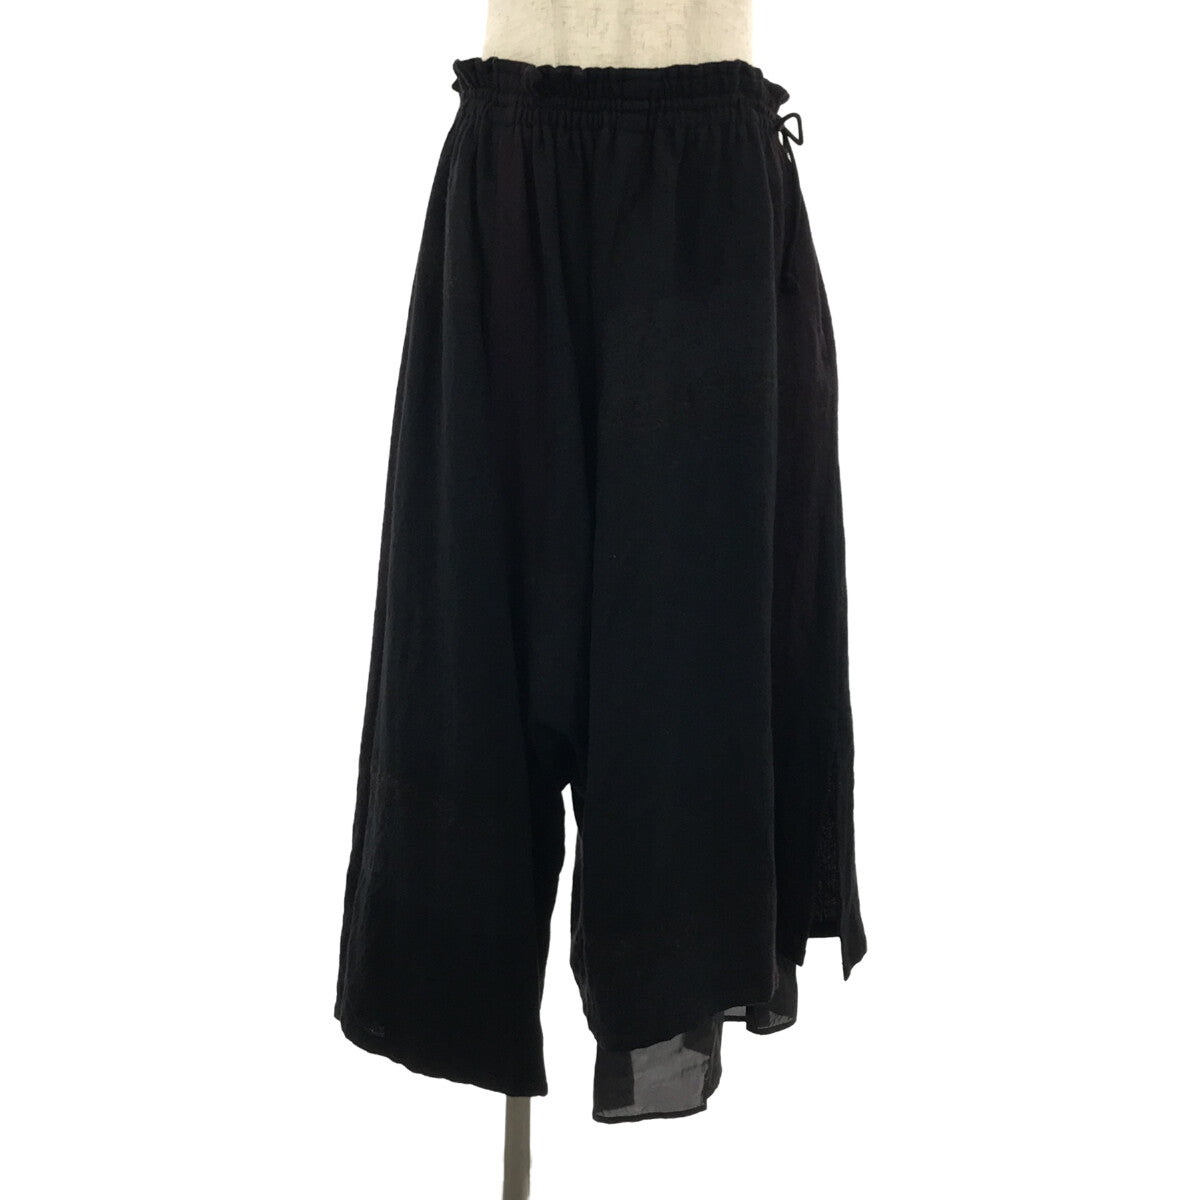 yohji yamamoto イージー スカート パンツ前からみるとスカートに見え